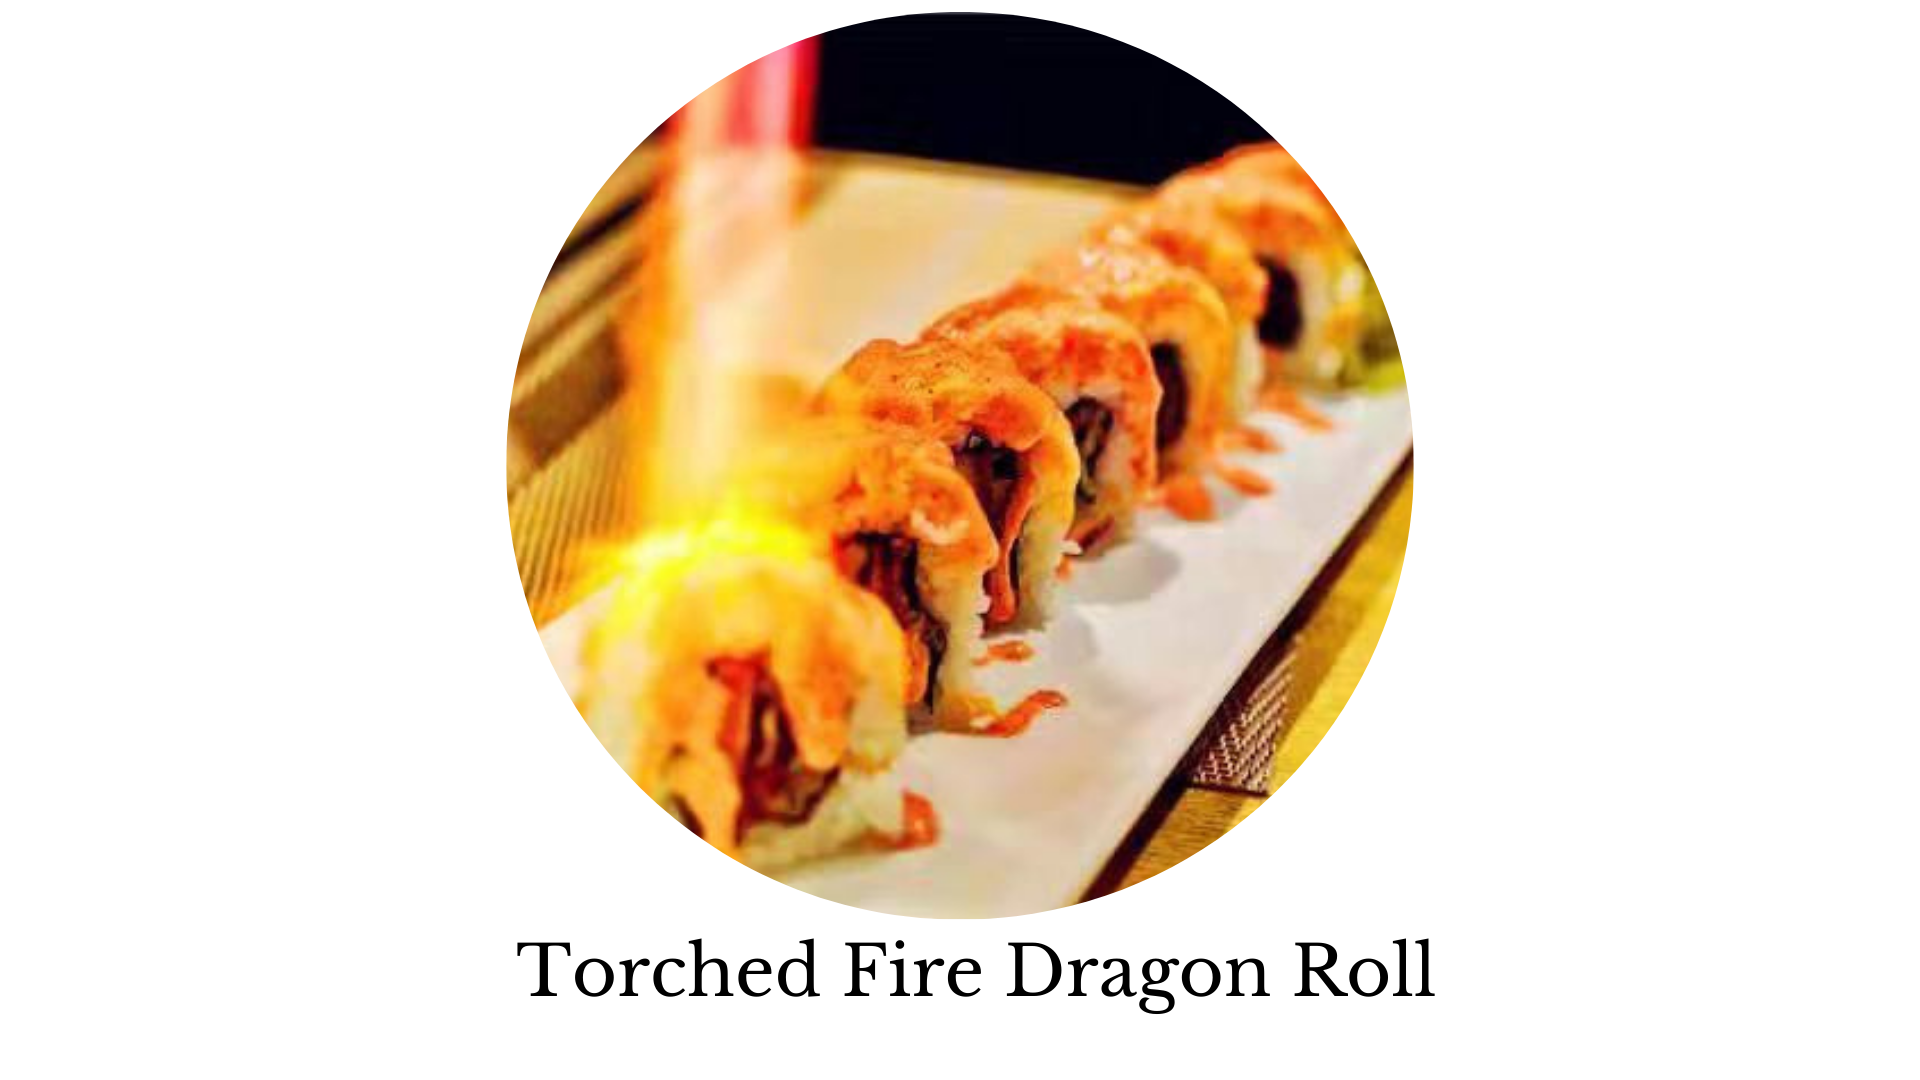 torched fire dragon roll, ebi, sushi, sashimi, sushi near me, sushi places near me, best sushi near me, sushi rice